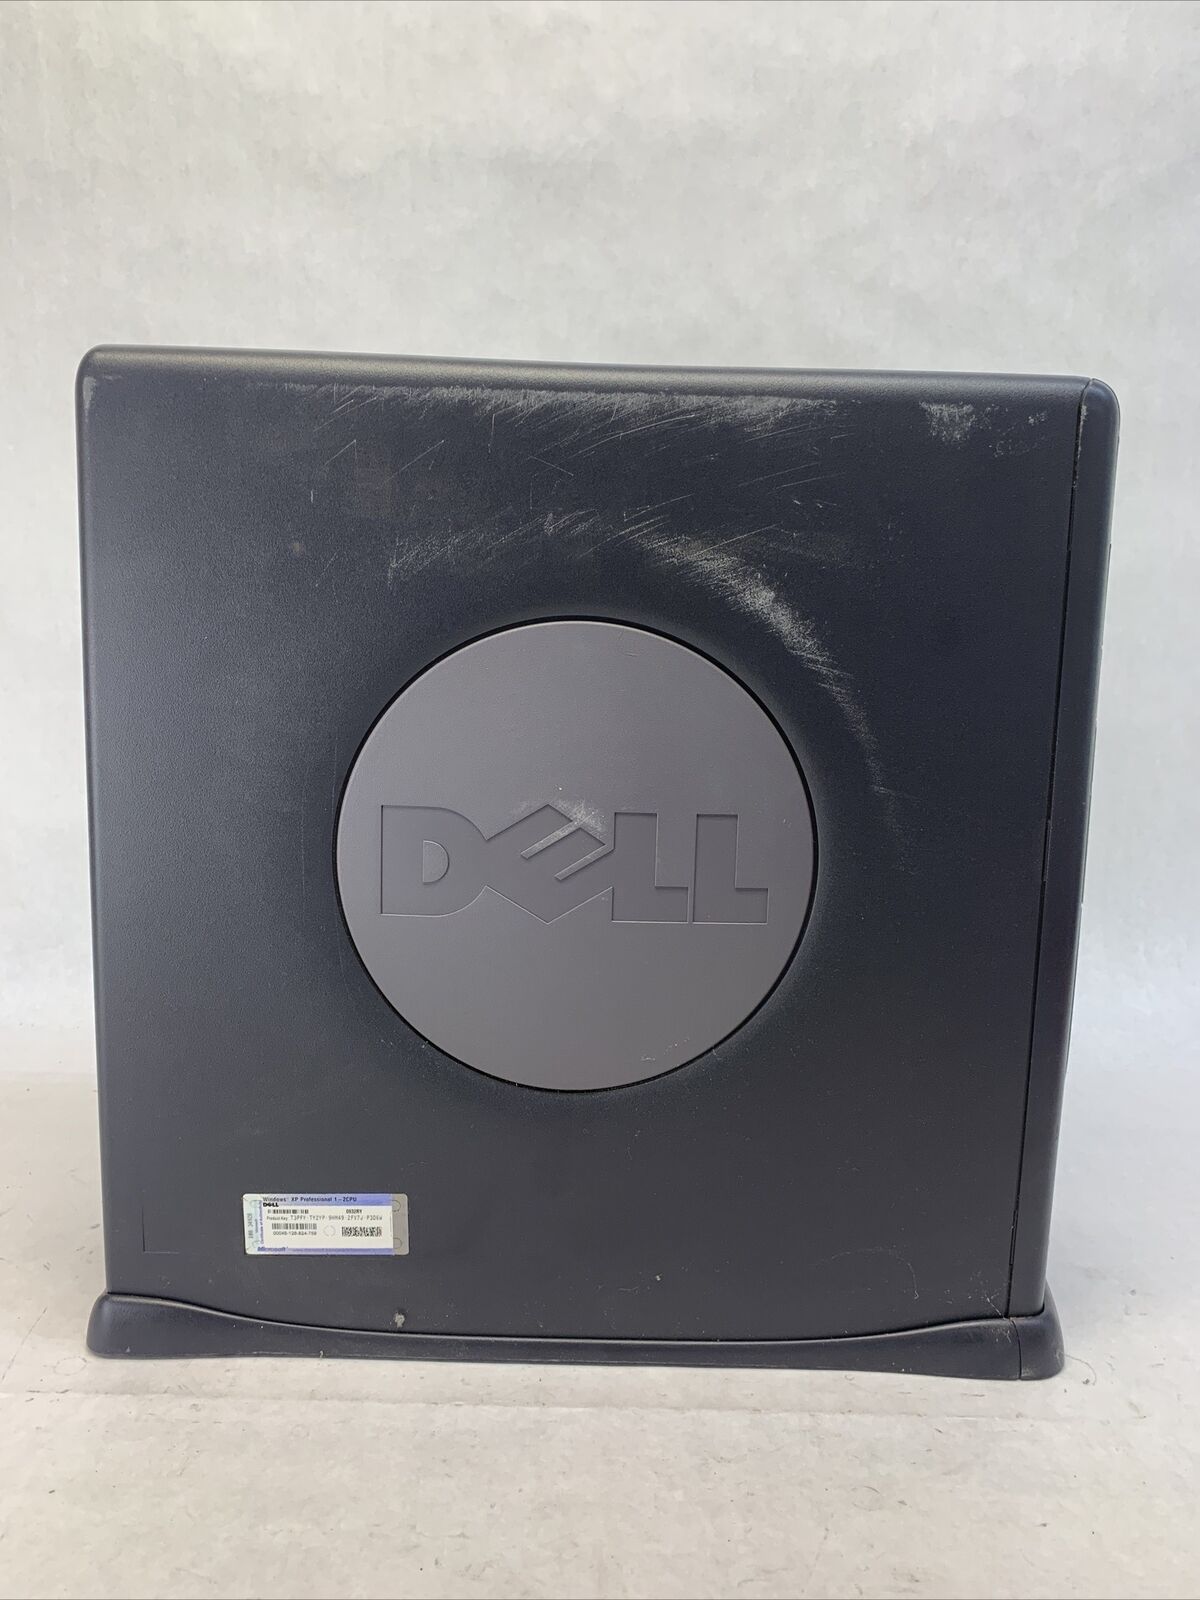 Dell Dimension 8200 MT Intel Pentium 4 1.9GHz 512MB RAM No HDD No OS